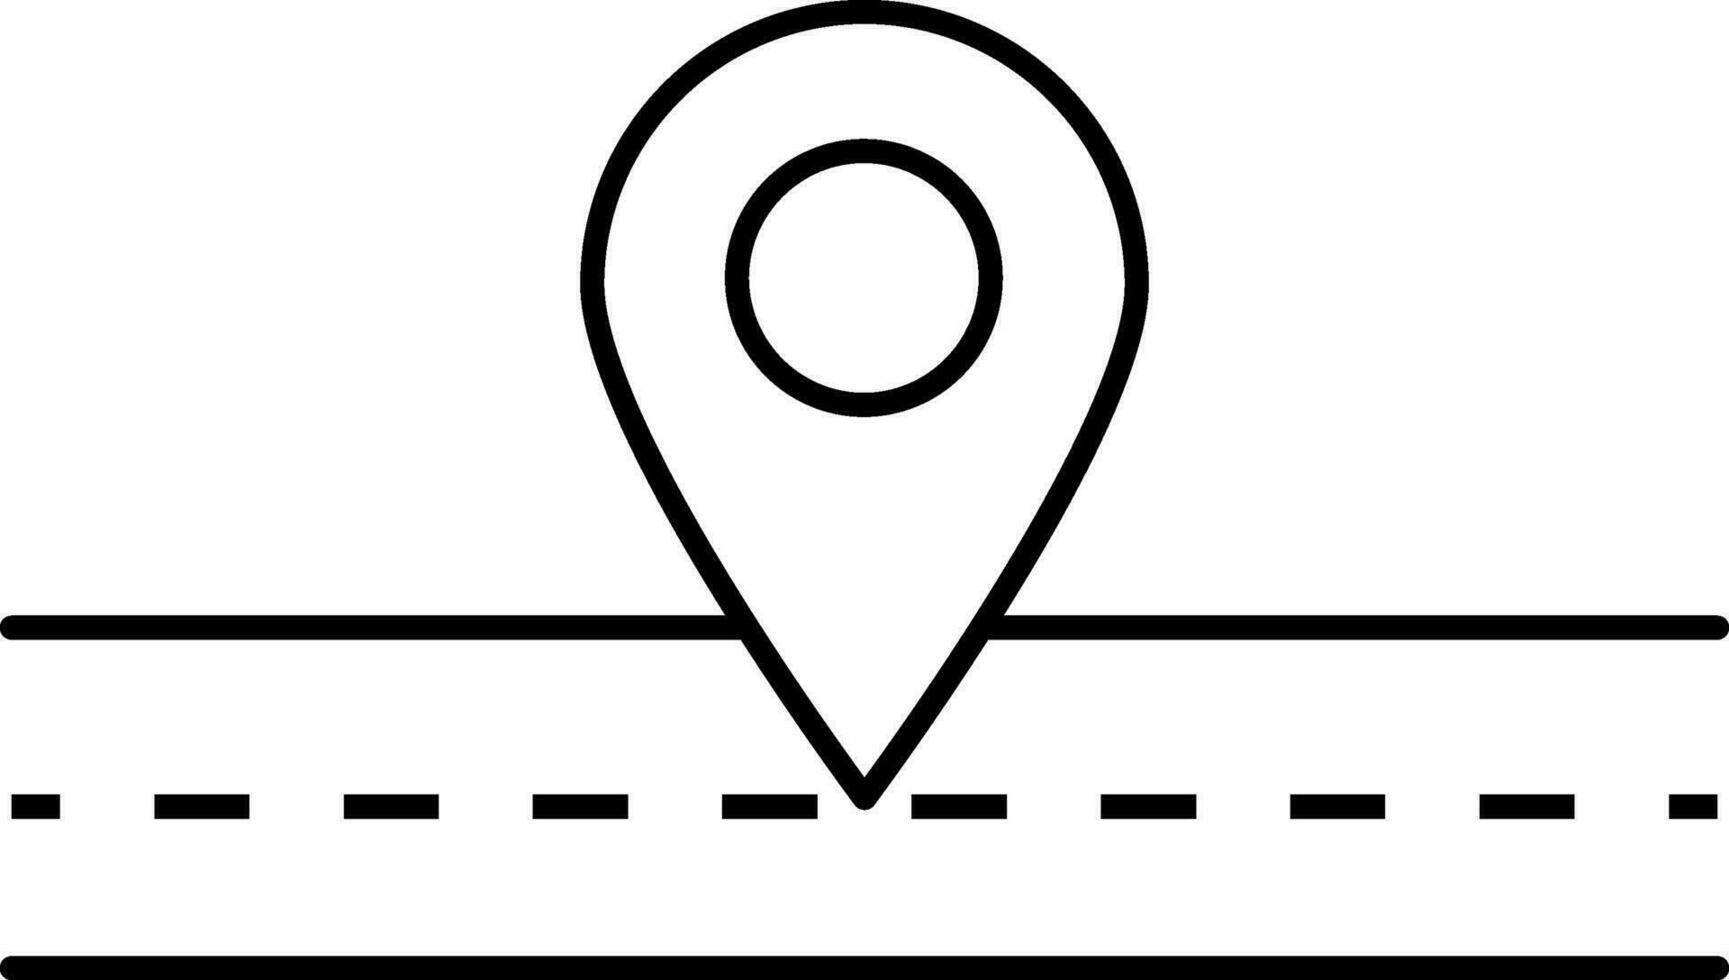 Black line art map road location. vector